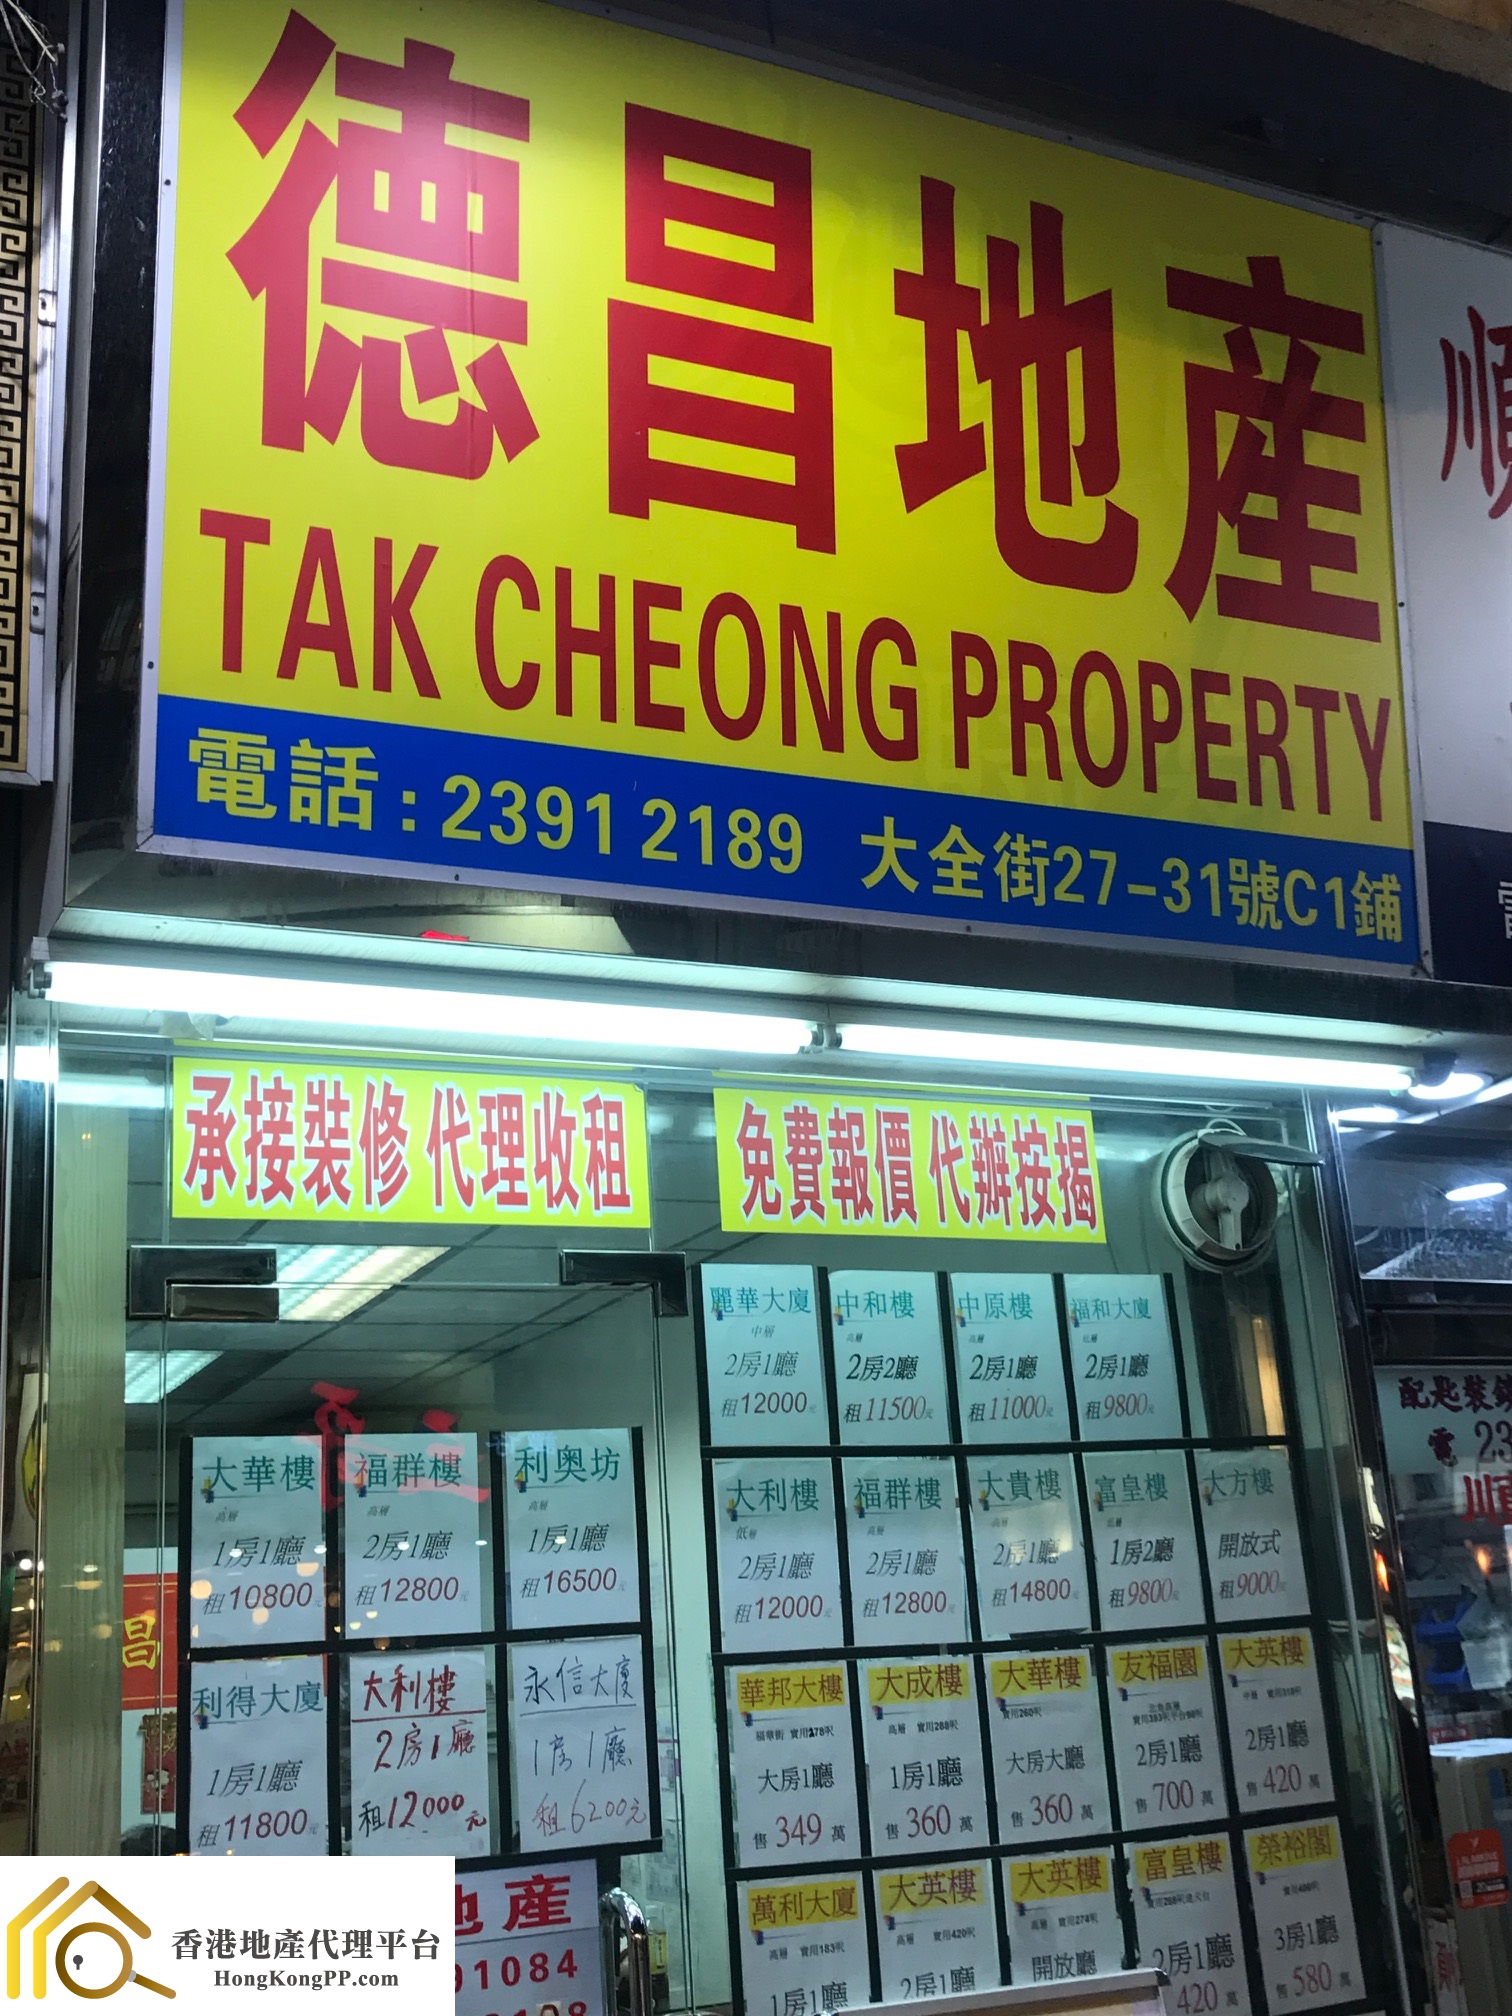 ShopEstate Agent: 德昌地產 Tak Cheong Property